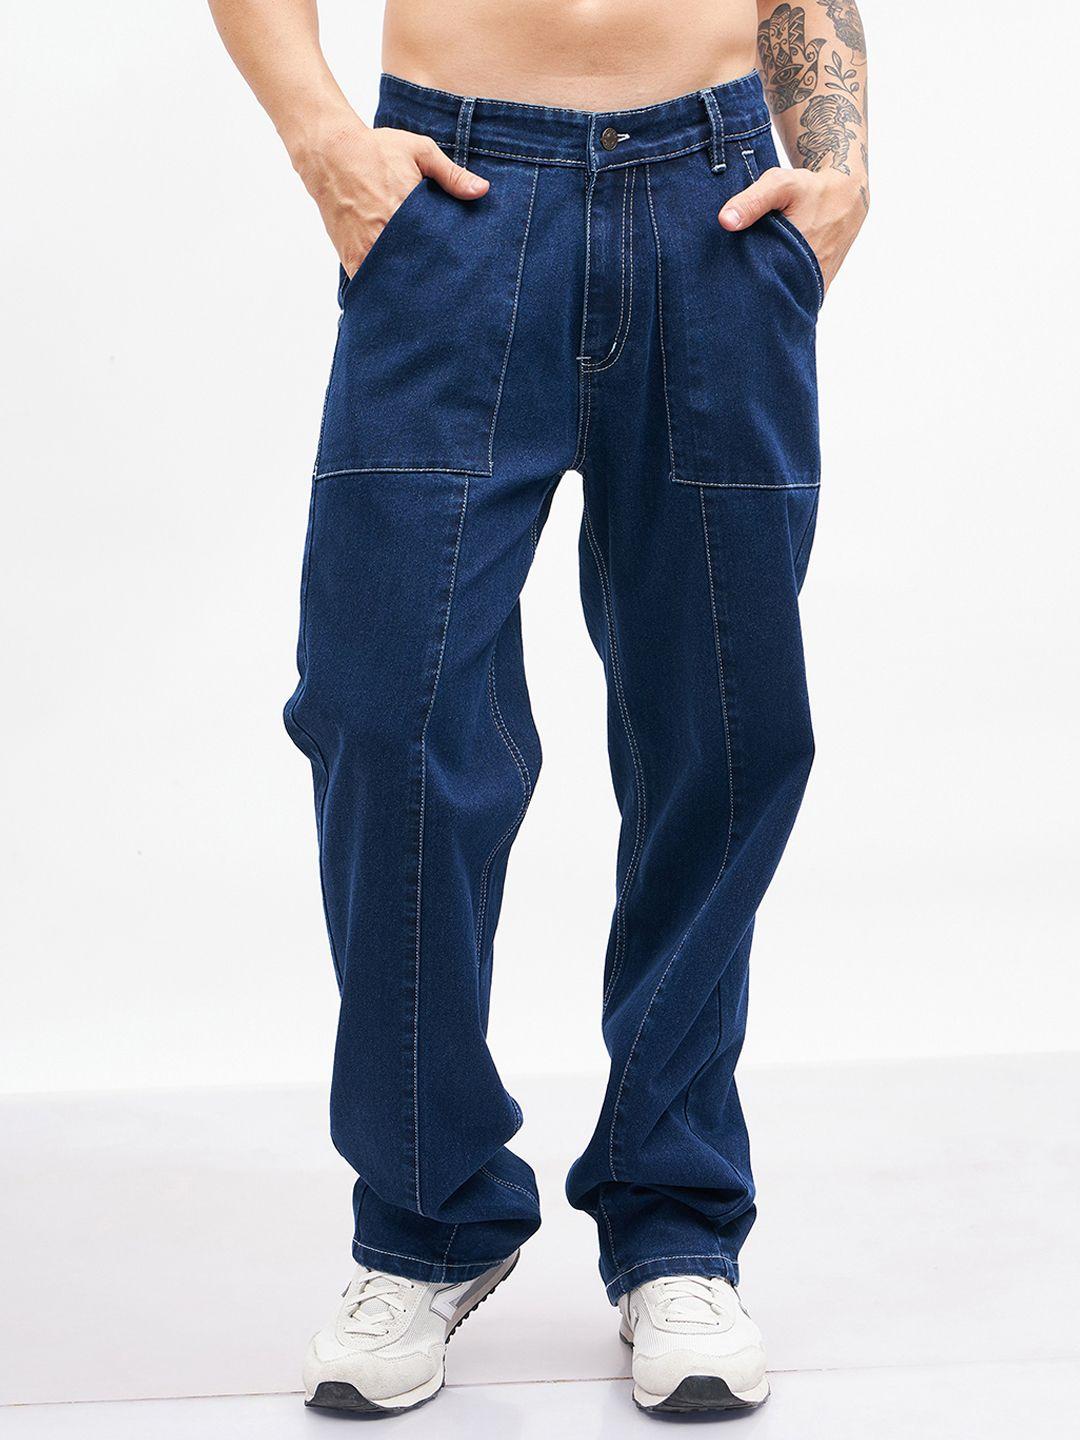 mascln sassafras men clean look relaxed fit pure cotton jeans